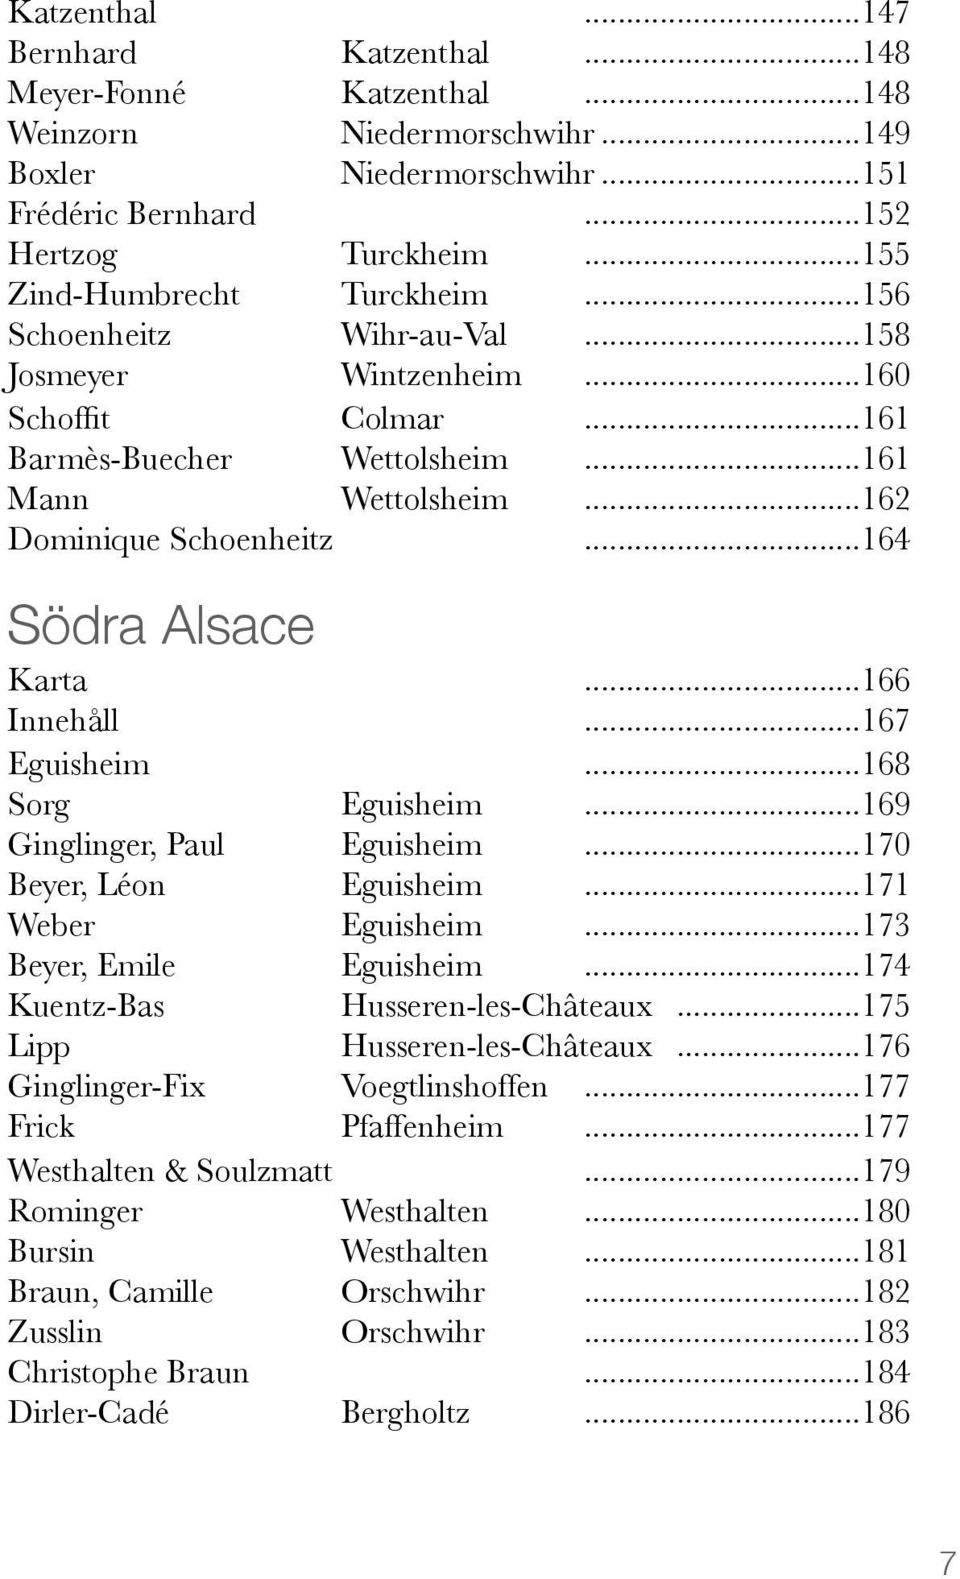 .. 164 Södra Alsace Karta... 166 167 Eguisheim... 168 Sorg Eguisheim... 169 Ginglinger, Paul Eguisheim... 170 Beyer, Léon Eguisheim... 171 Weber Eguisheim... 173 Beyer, Emile Eguisheim.